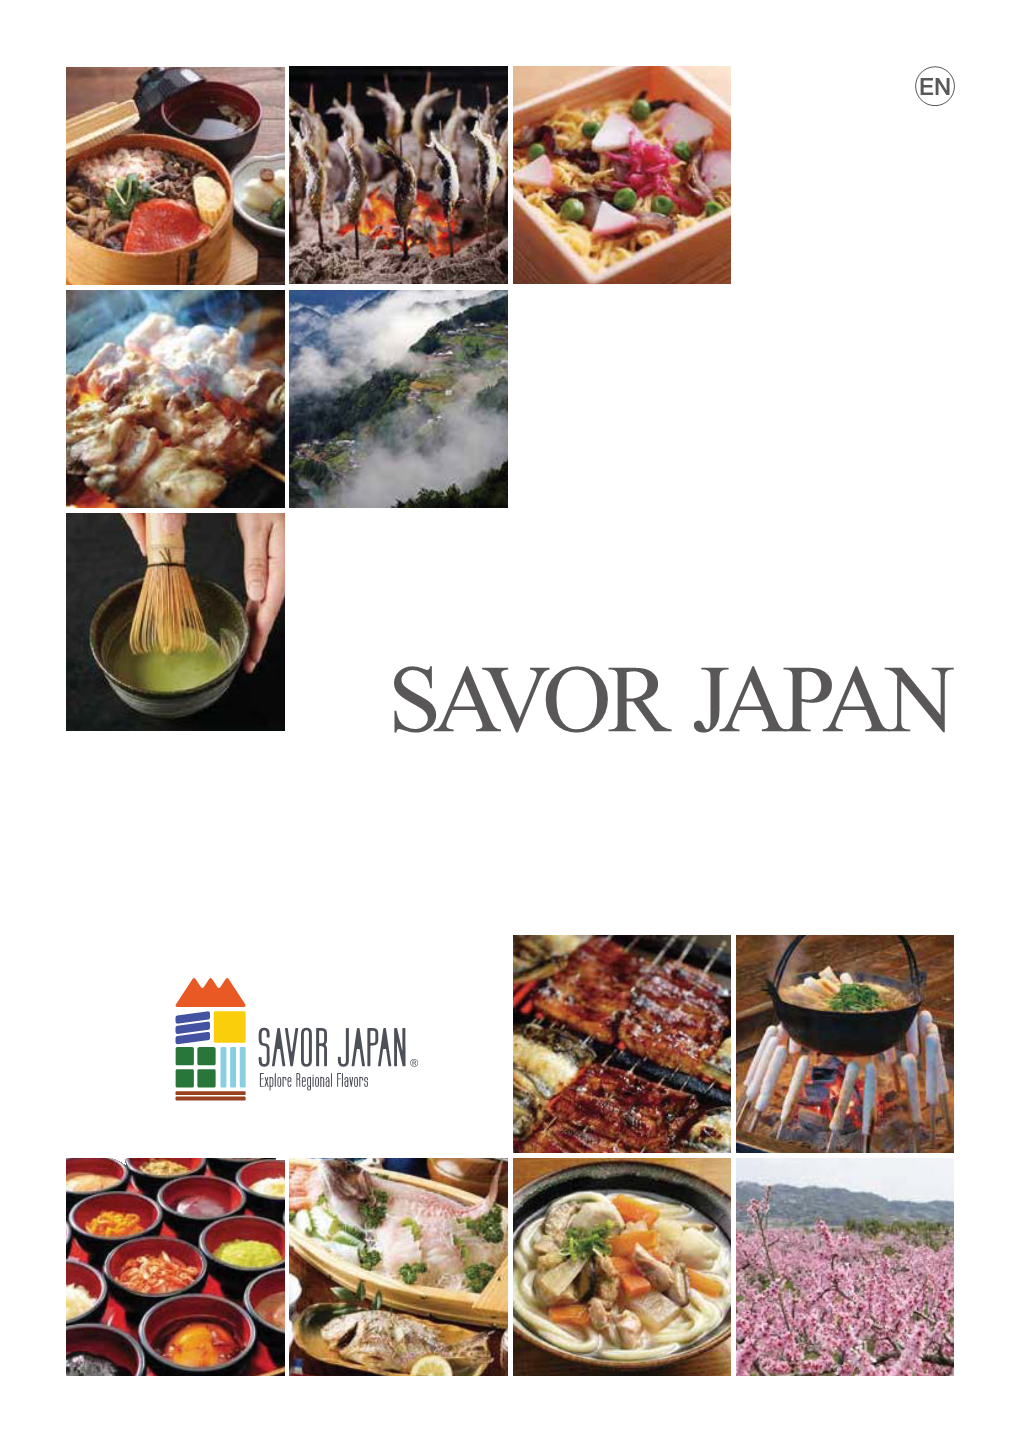 SAVOR JAPAN What Is SAVOR JAPAN?